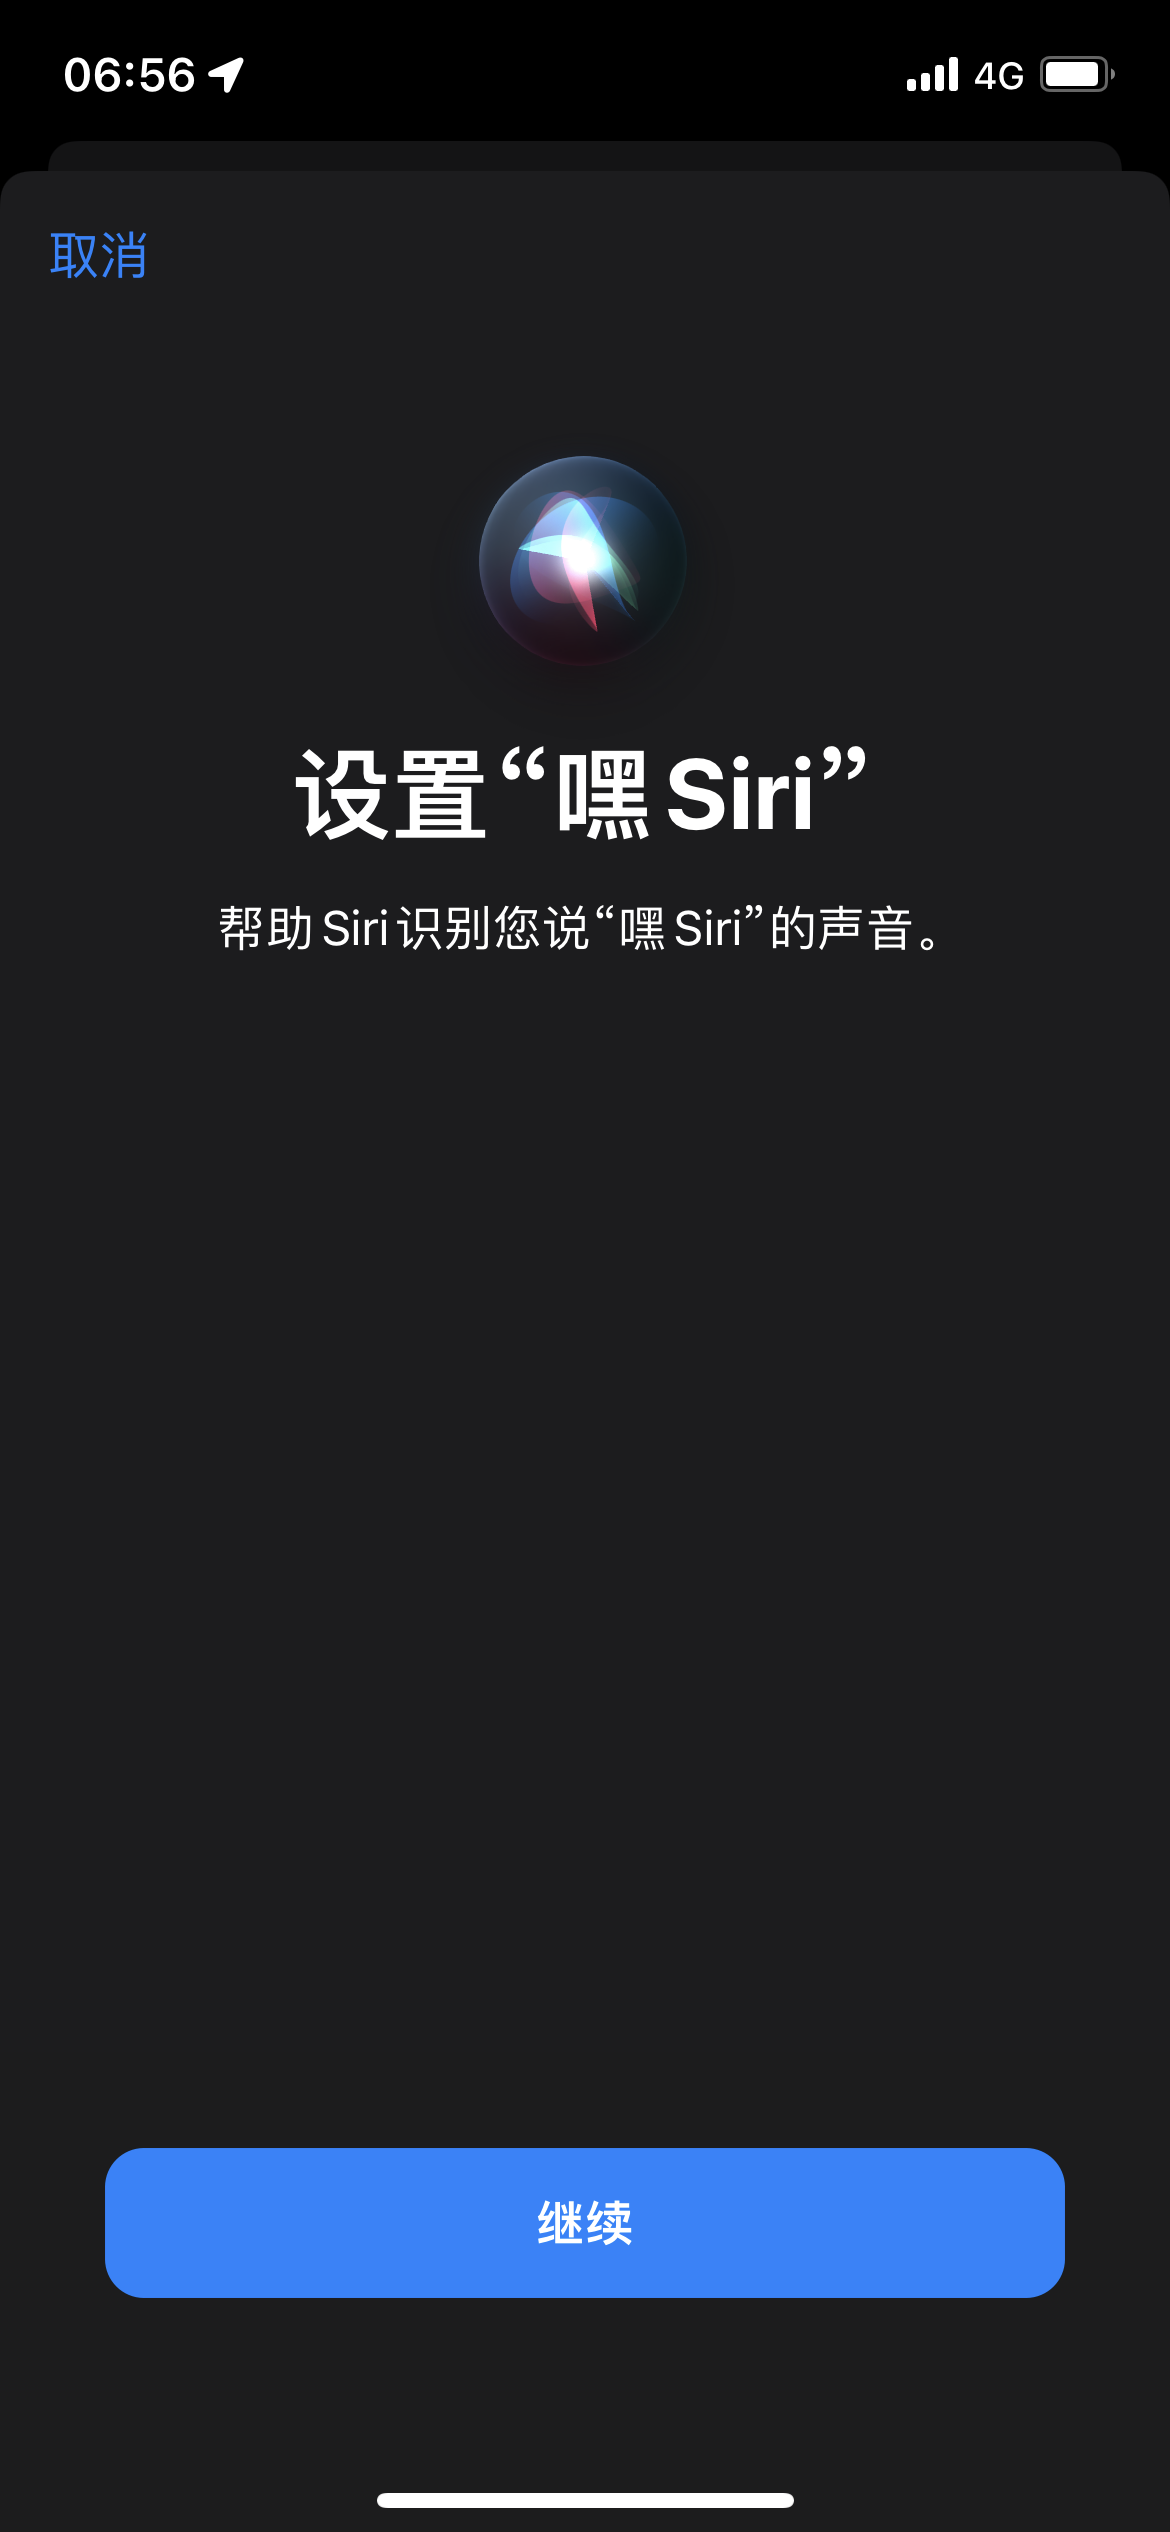 Apple wants to change Siri command to just 'Siri' - 9to5Mac